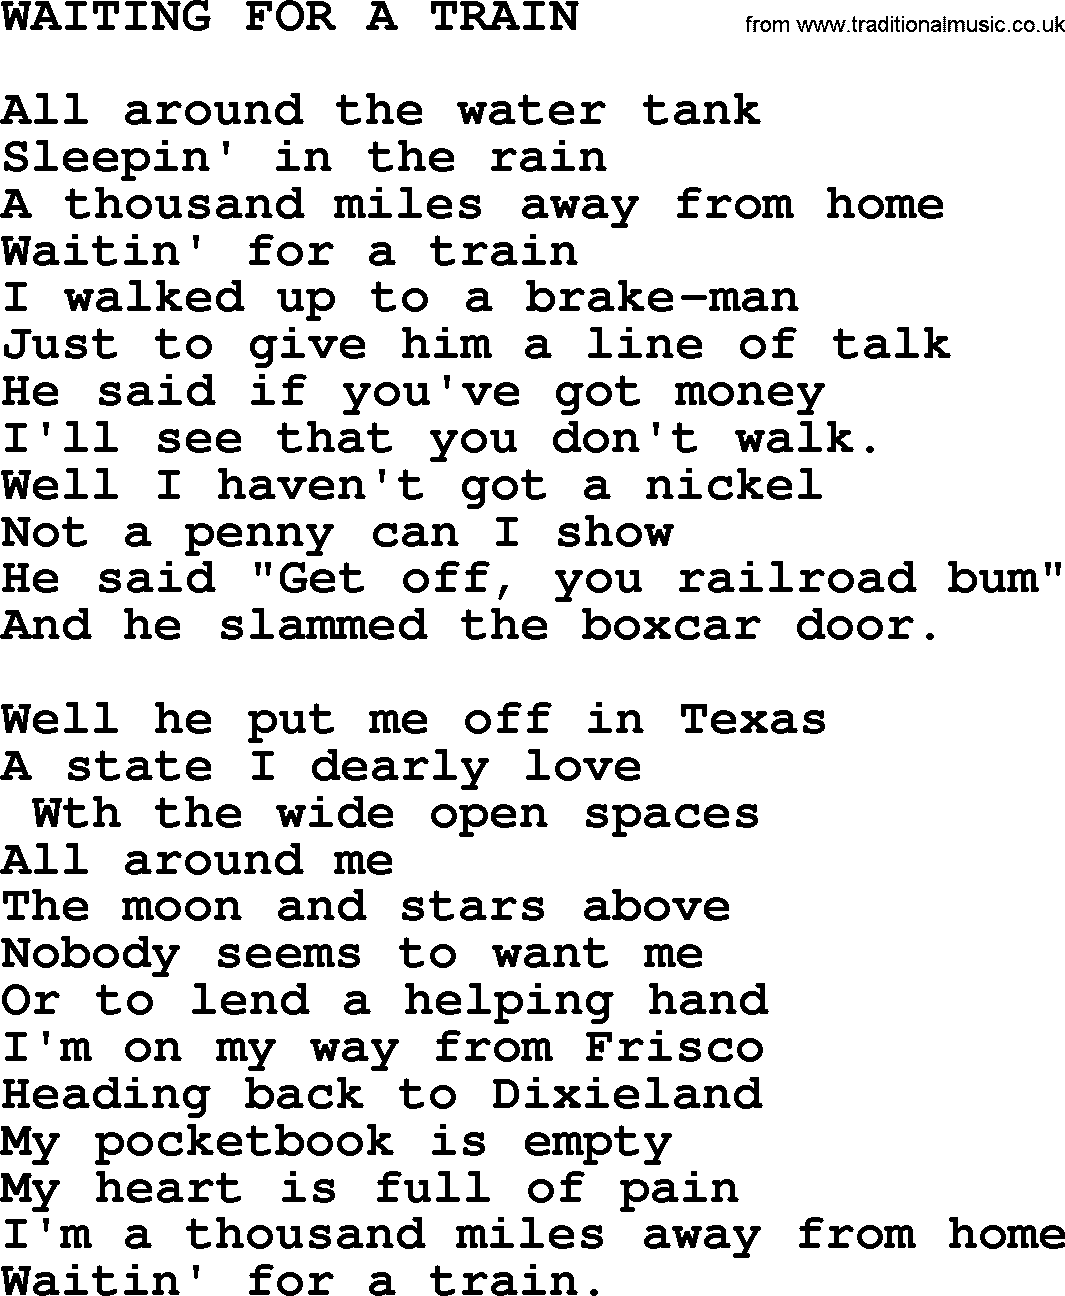 Merle Haggard song: Waiting For A Train, lyrics.